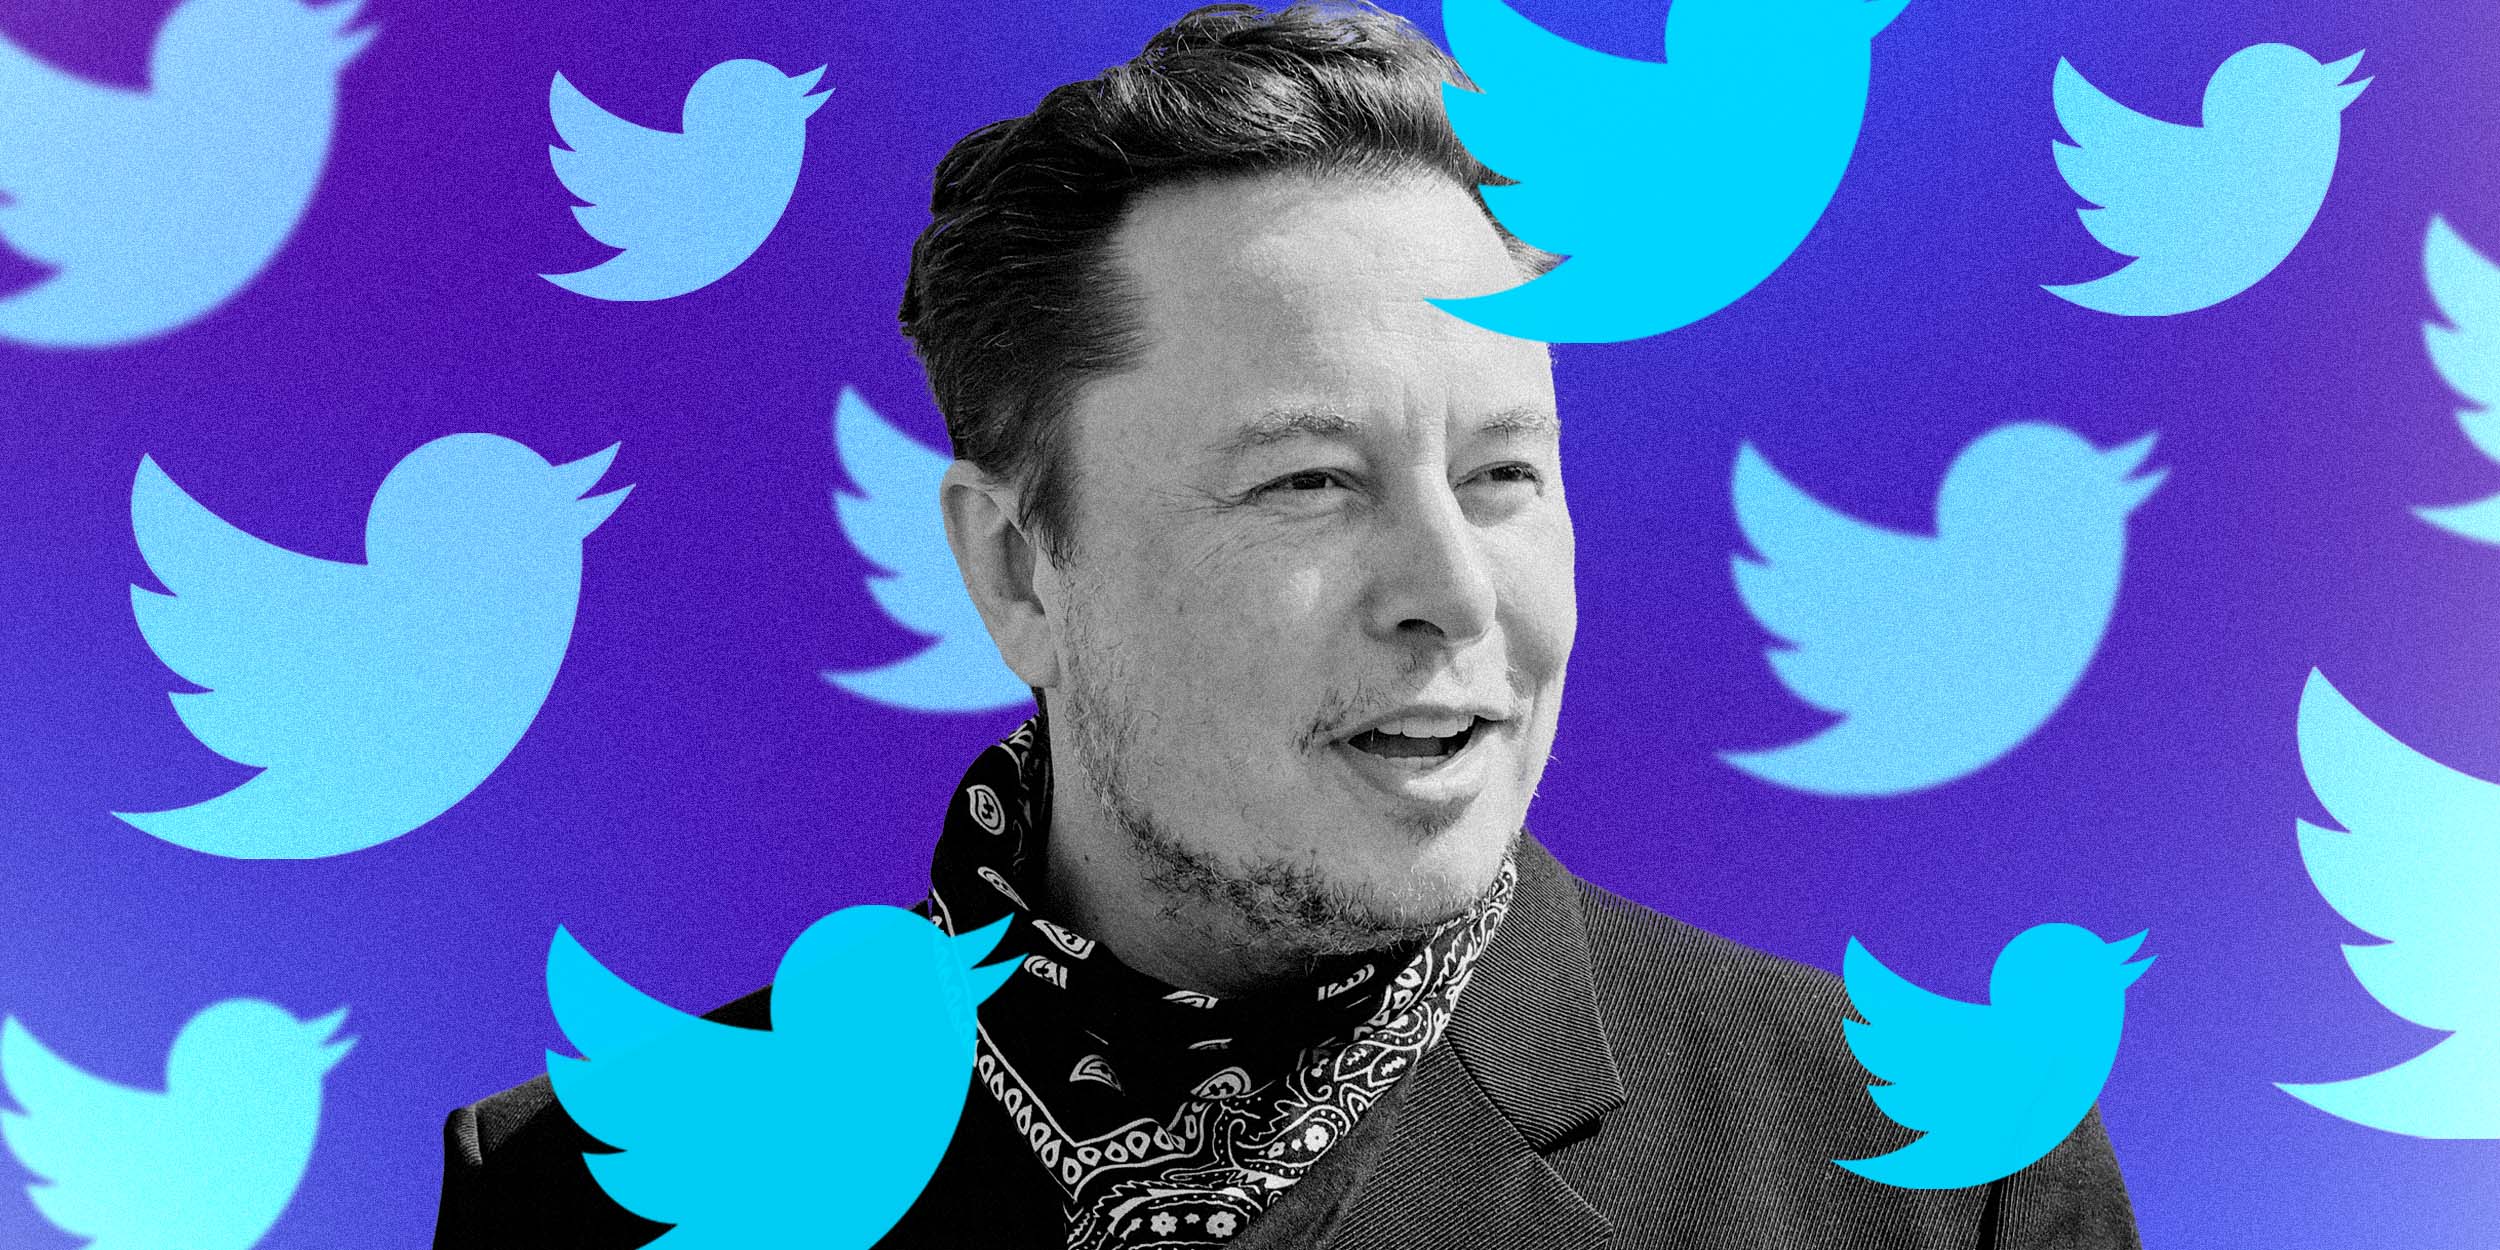 Wouldn't make sense to buy Twitter "if we're heading into World War 3": Elon Musk